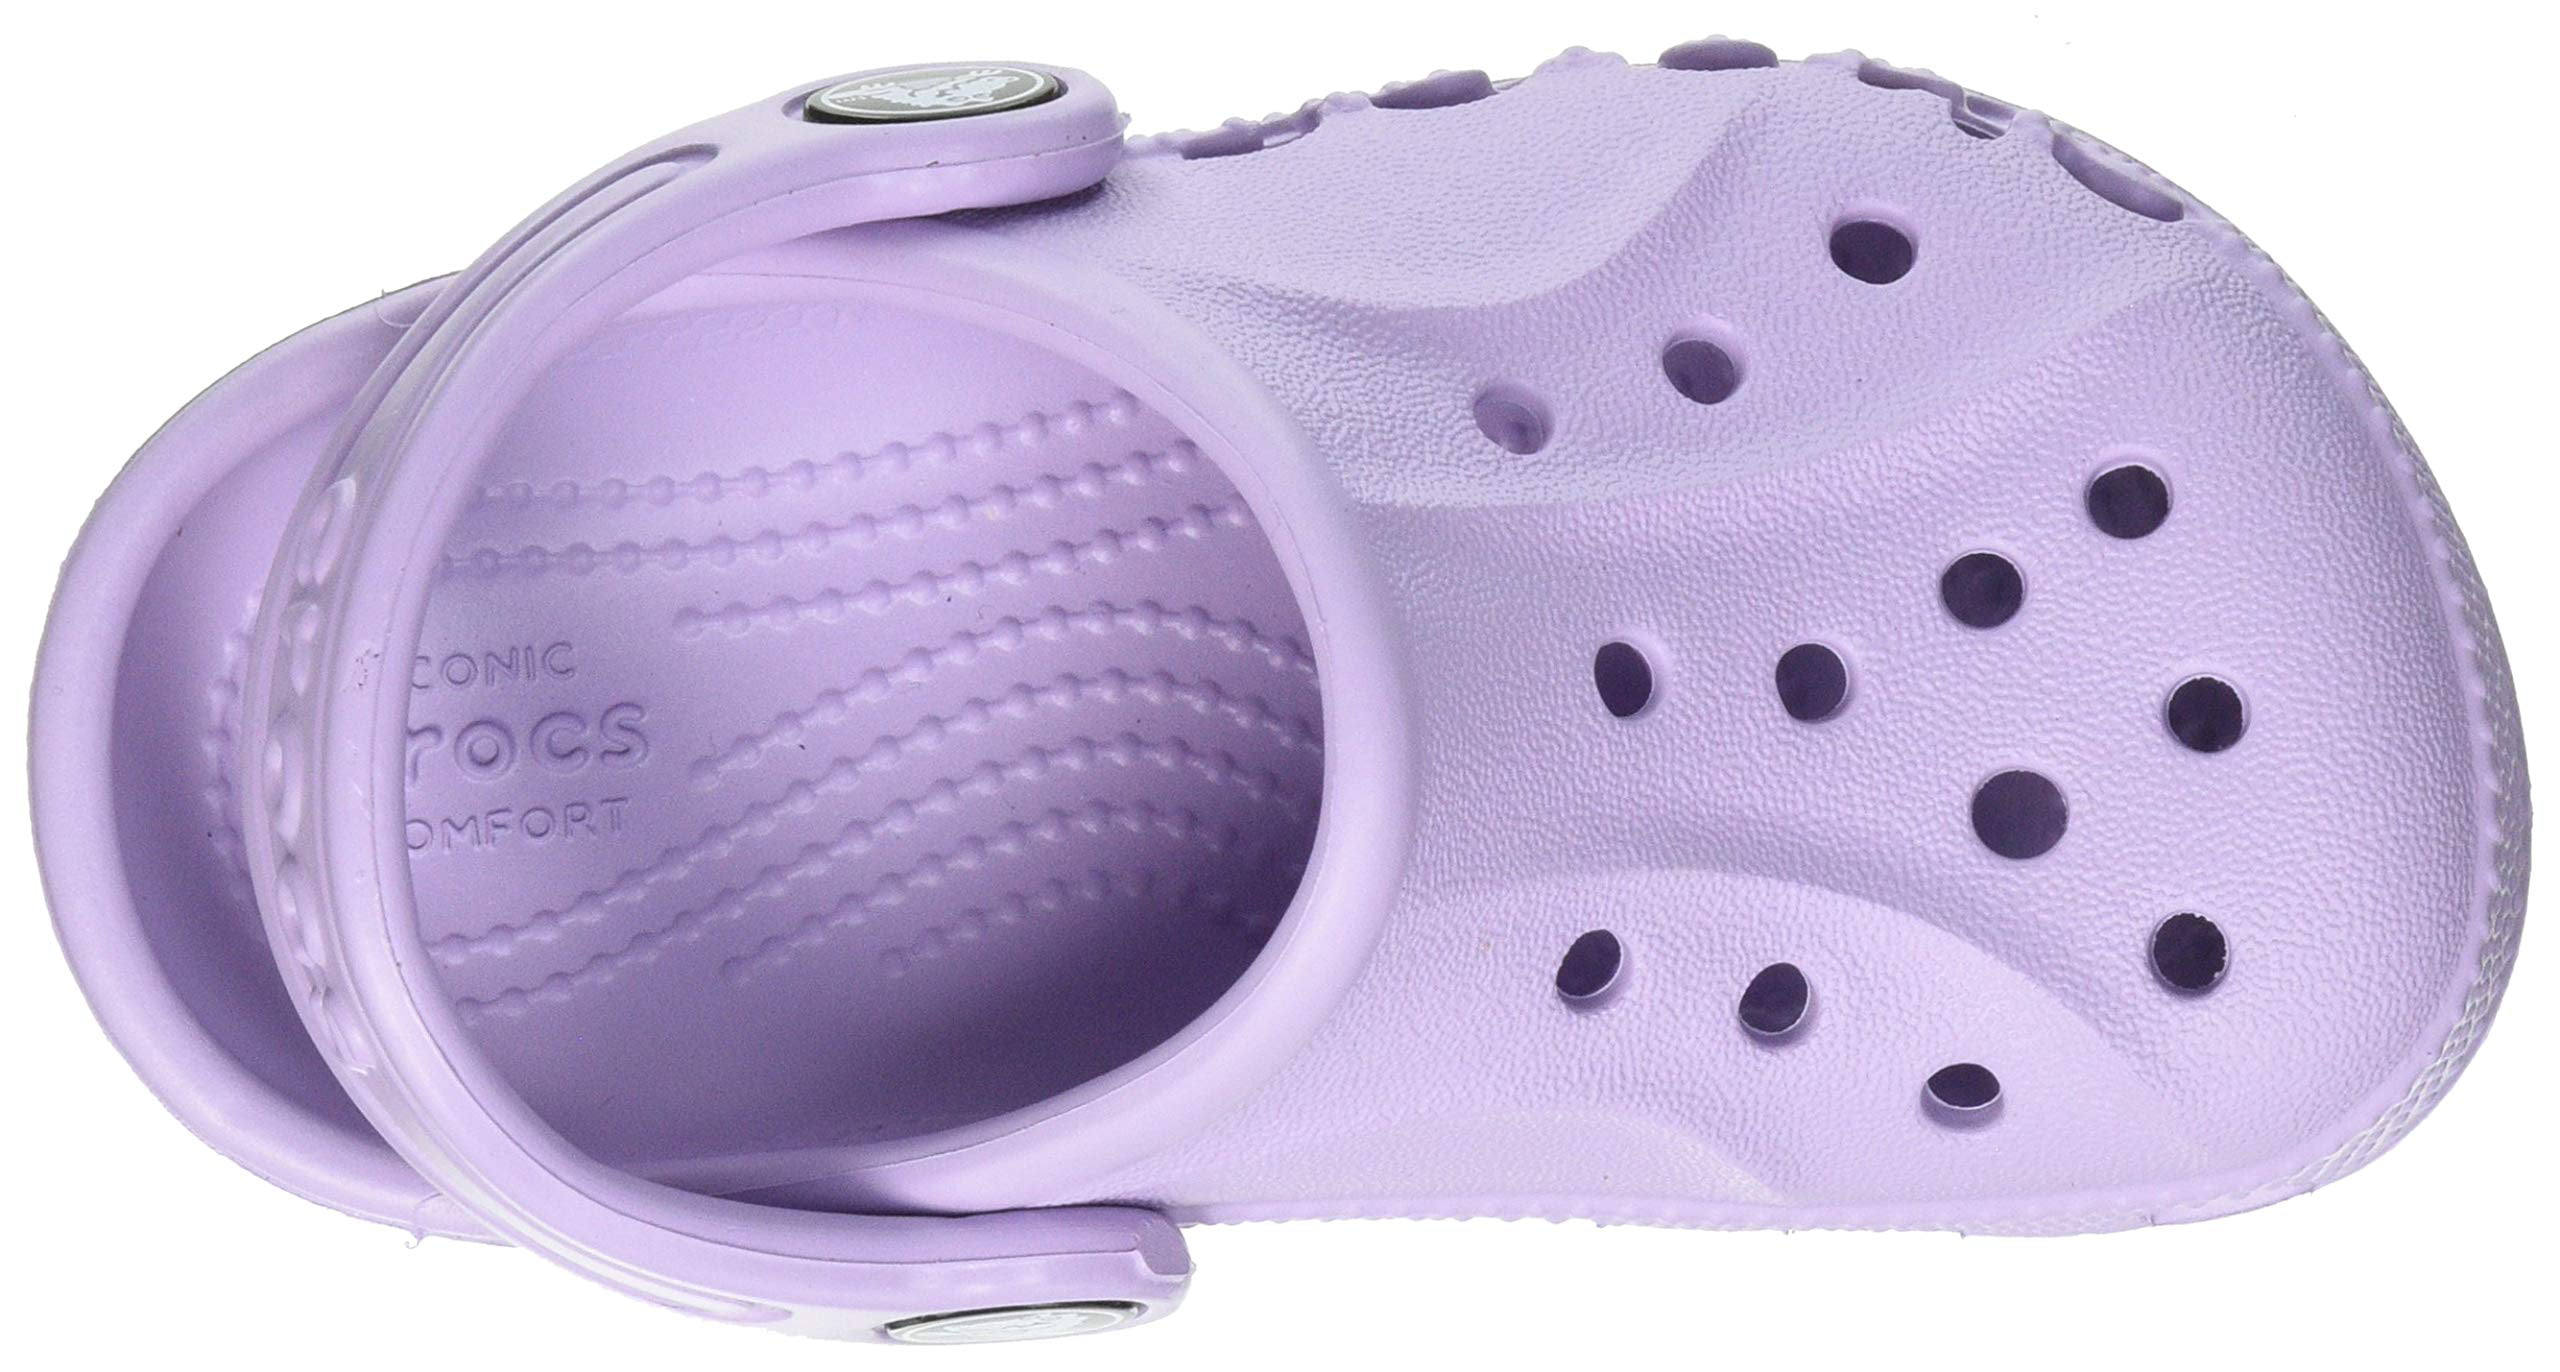 Girls Crocs Boy's Baya Clog Comfortable Slip On Water Shoe for Toddlers 